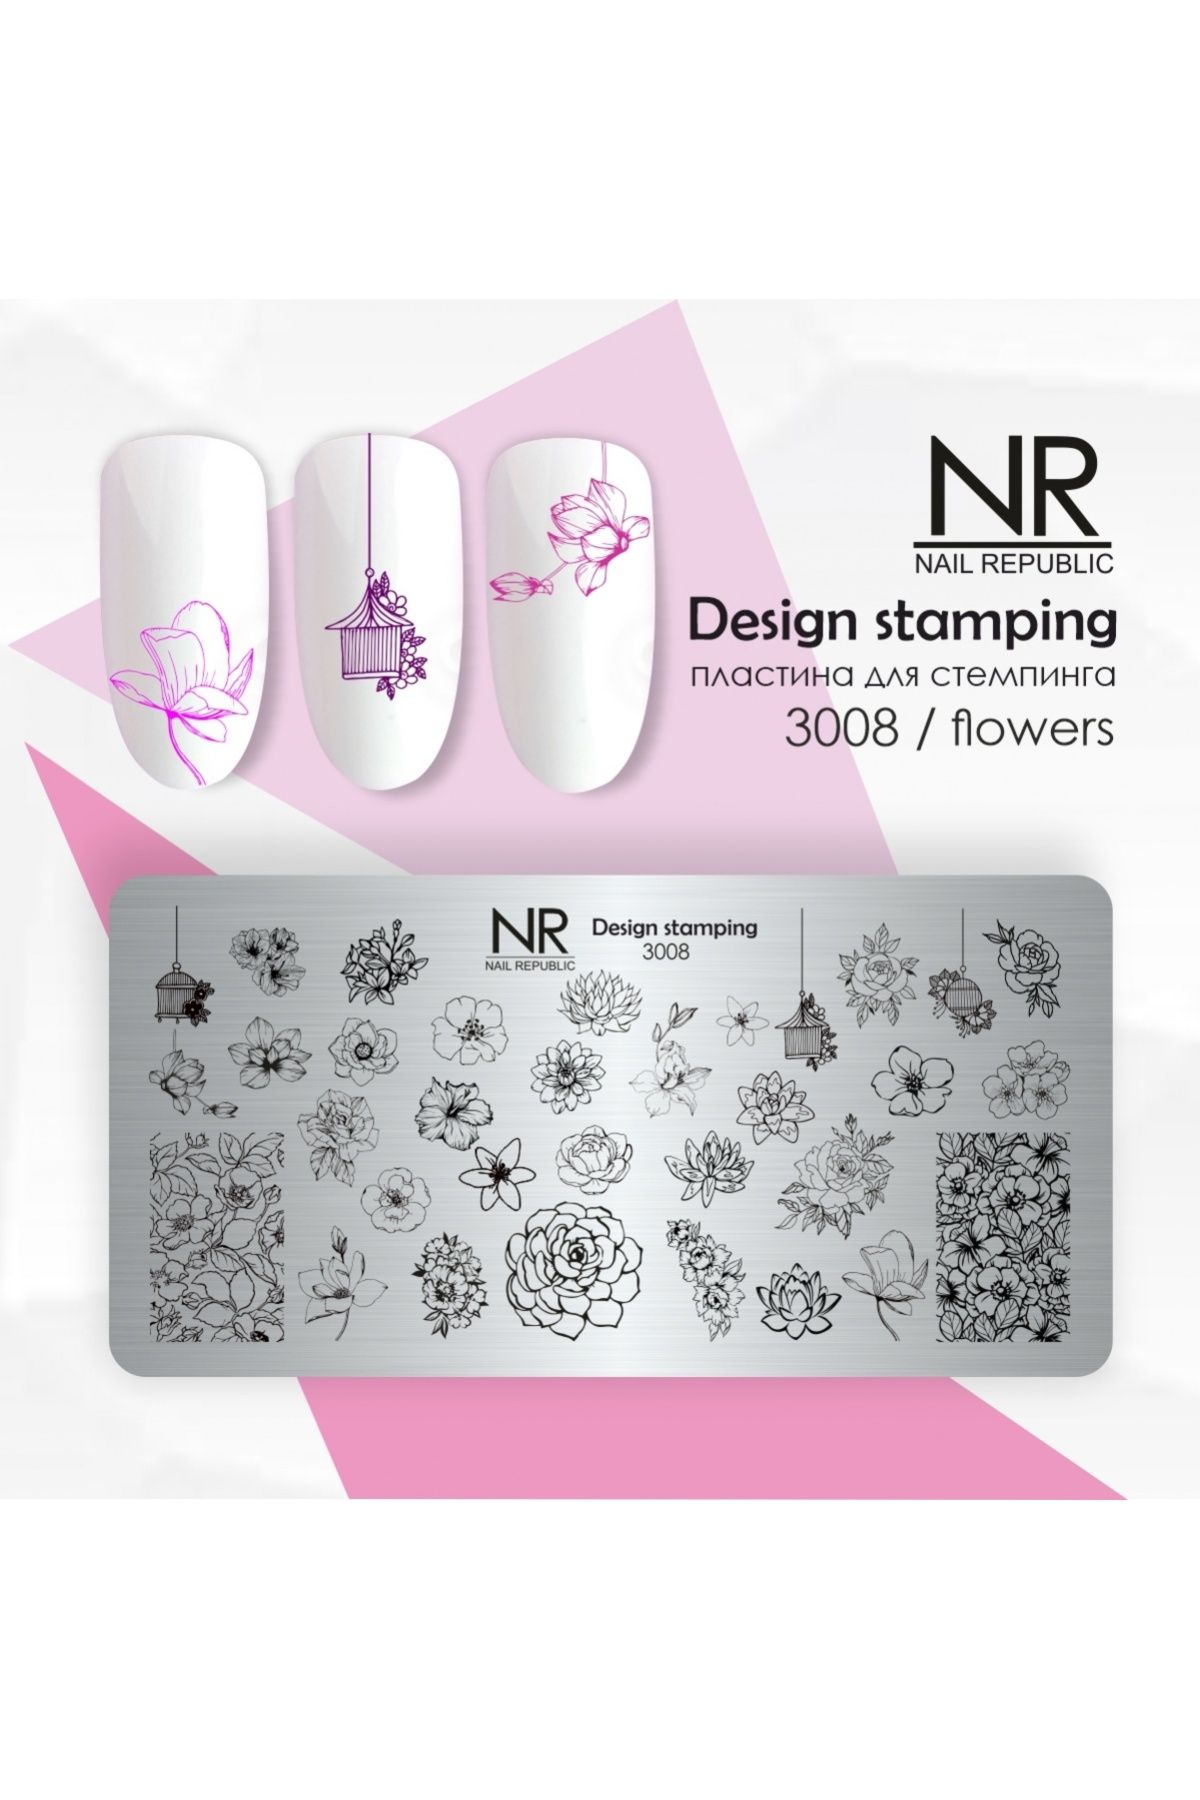 Nail Republic NR Stamping Plaka 3008, Flowers